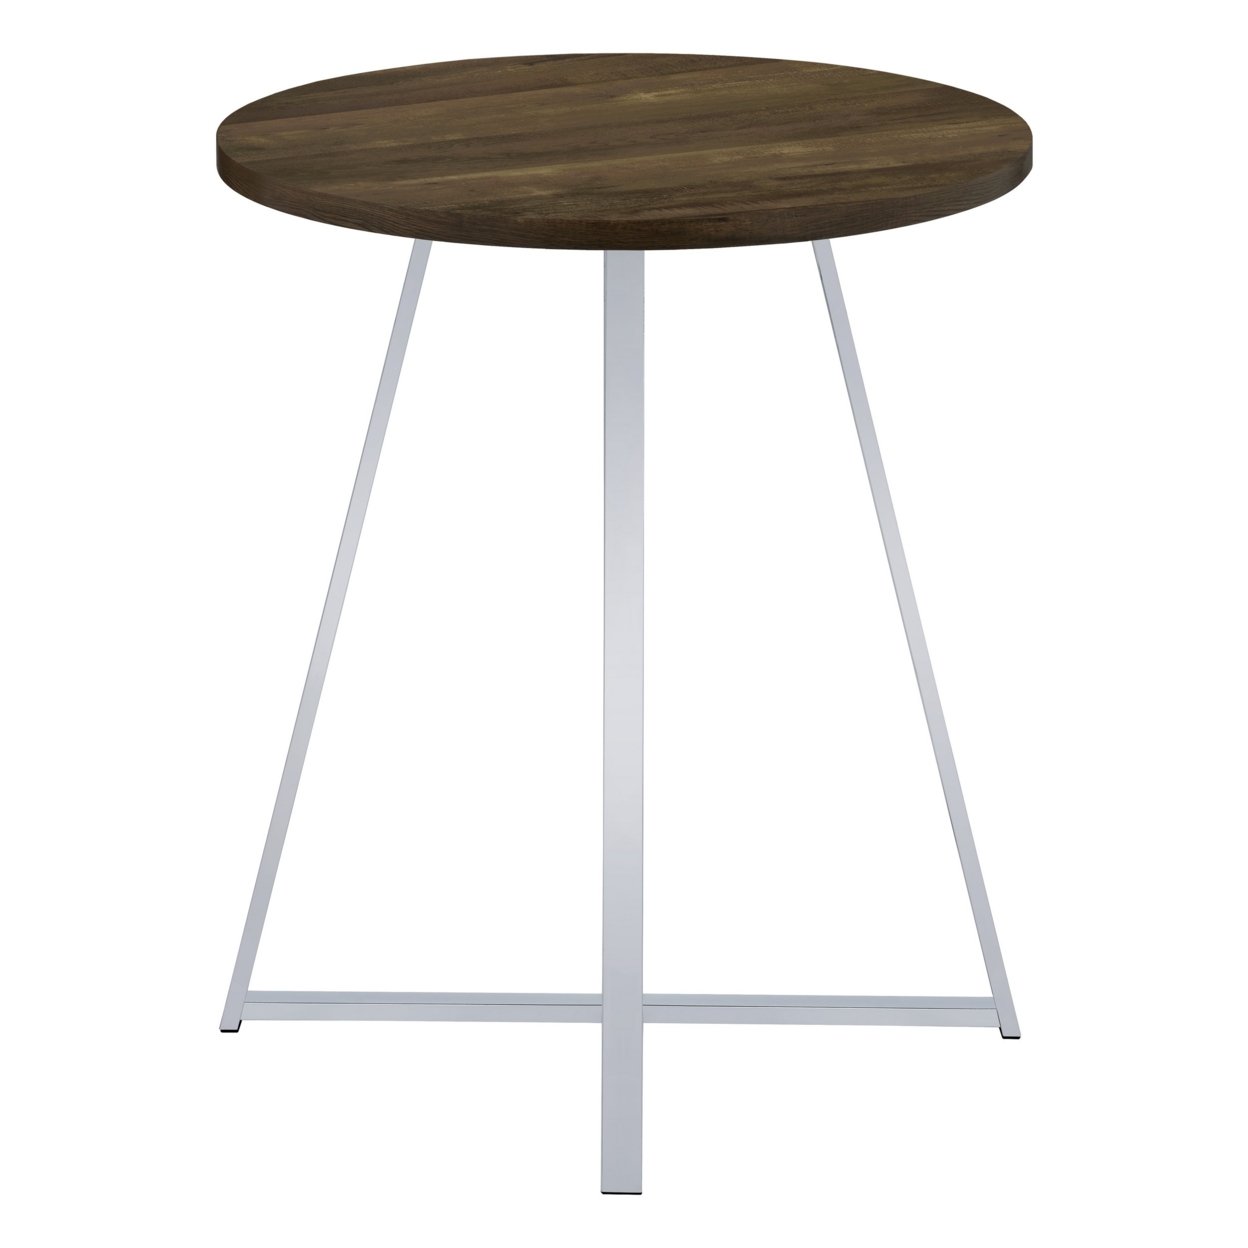 43 Inch Tall Modern Bar Table, Brown Round Top, Polished Chrome Flared Legs- Saltoro Sherpi